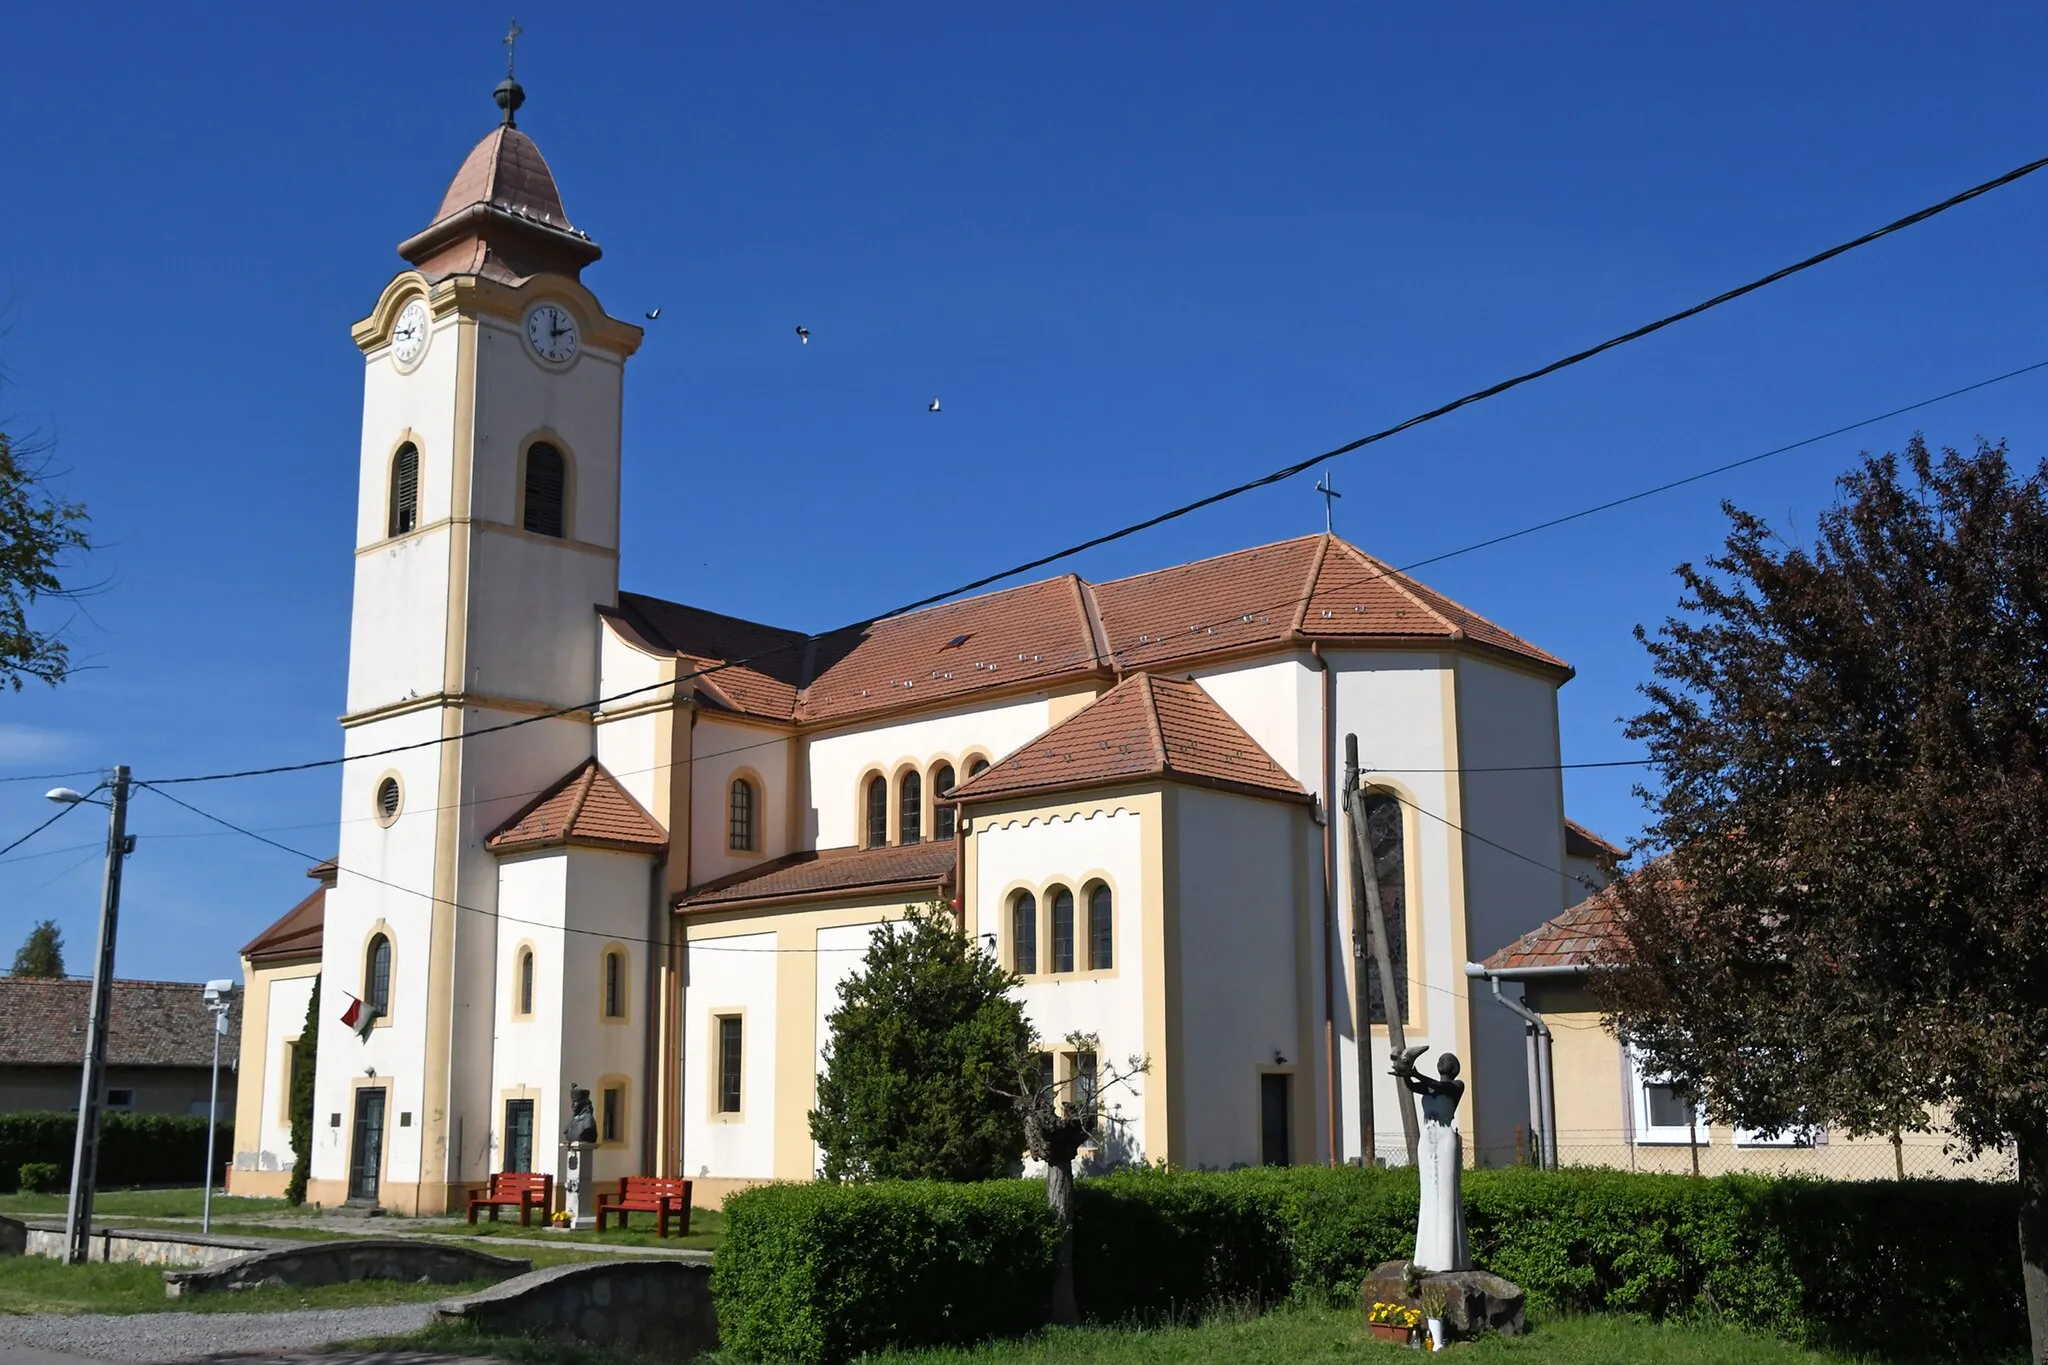 Photo showing: Roman Catholic church in Pély, Hungary